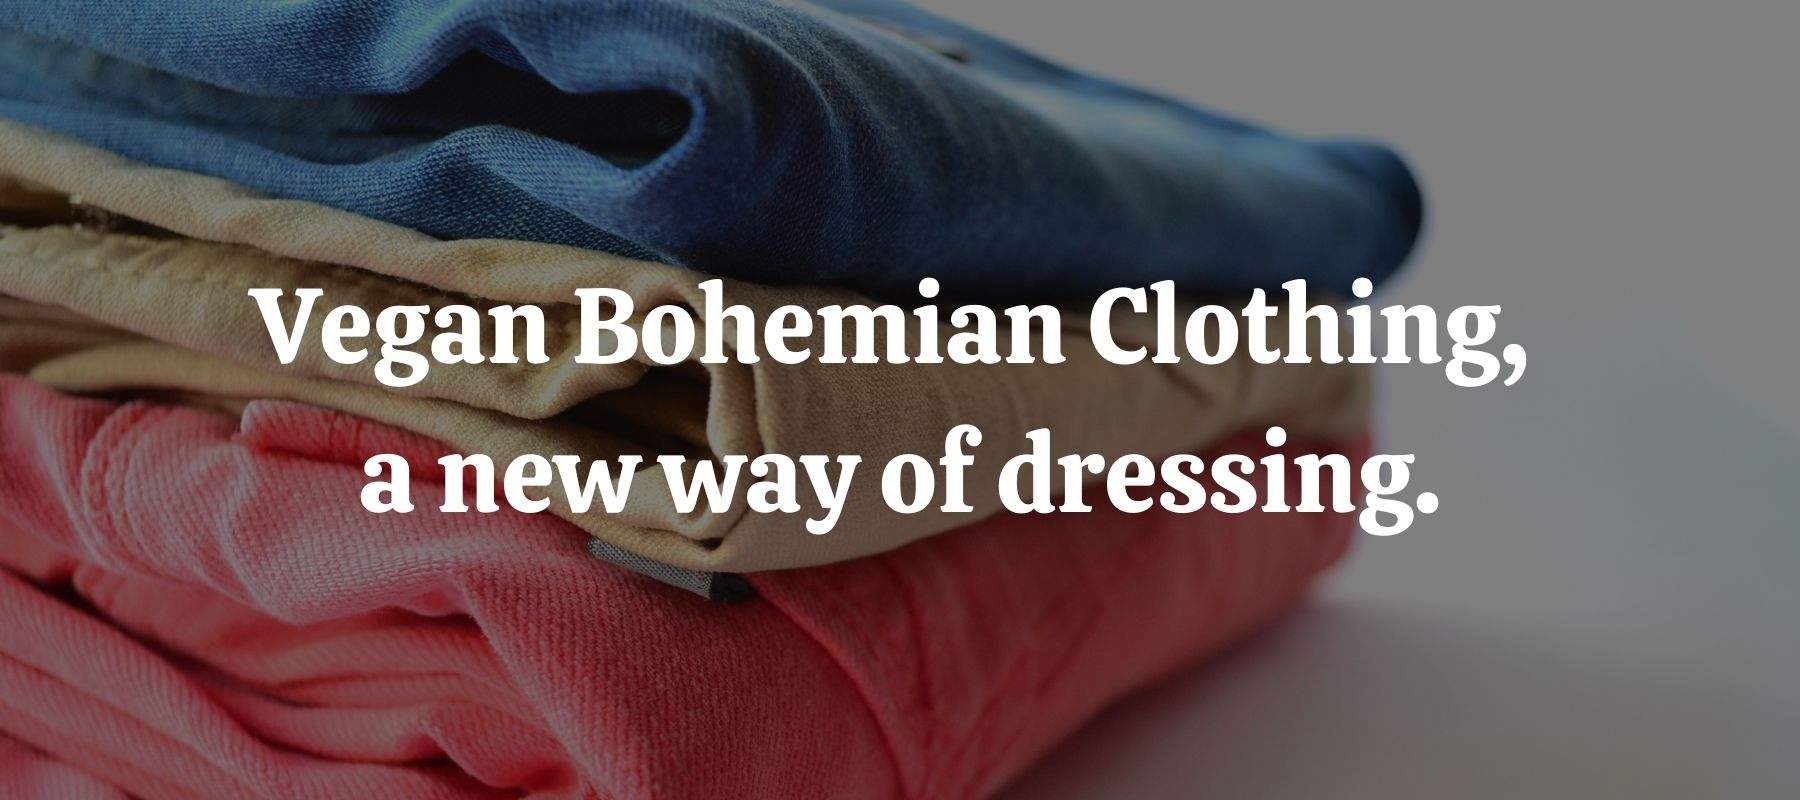 Vegan Bohemian Clothing, a new way of dressing.